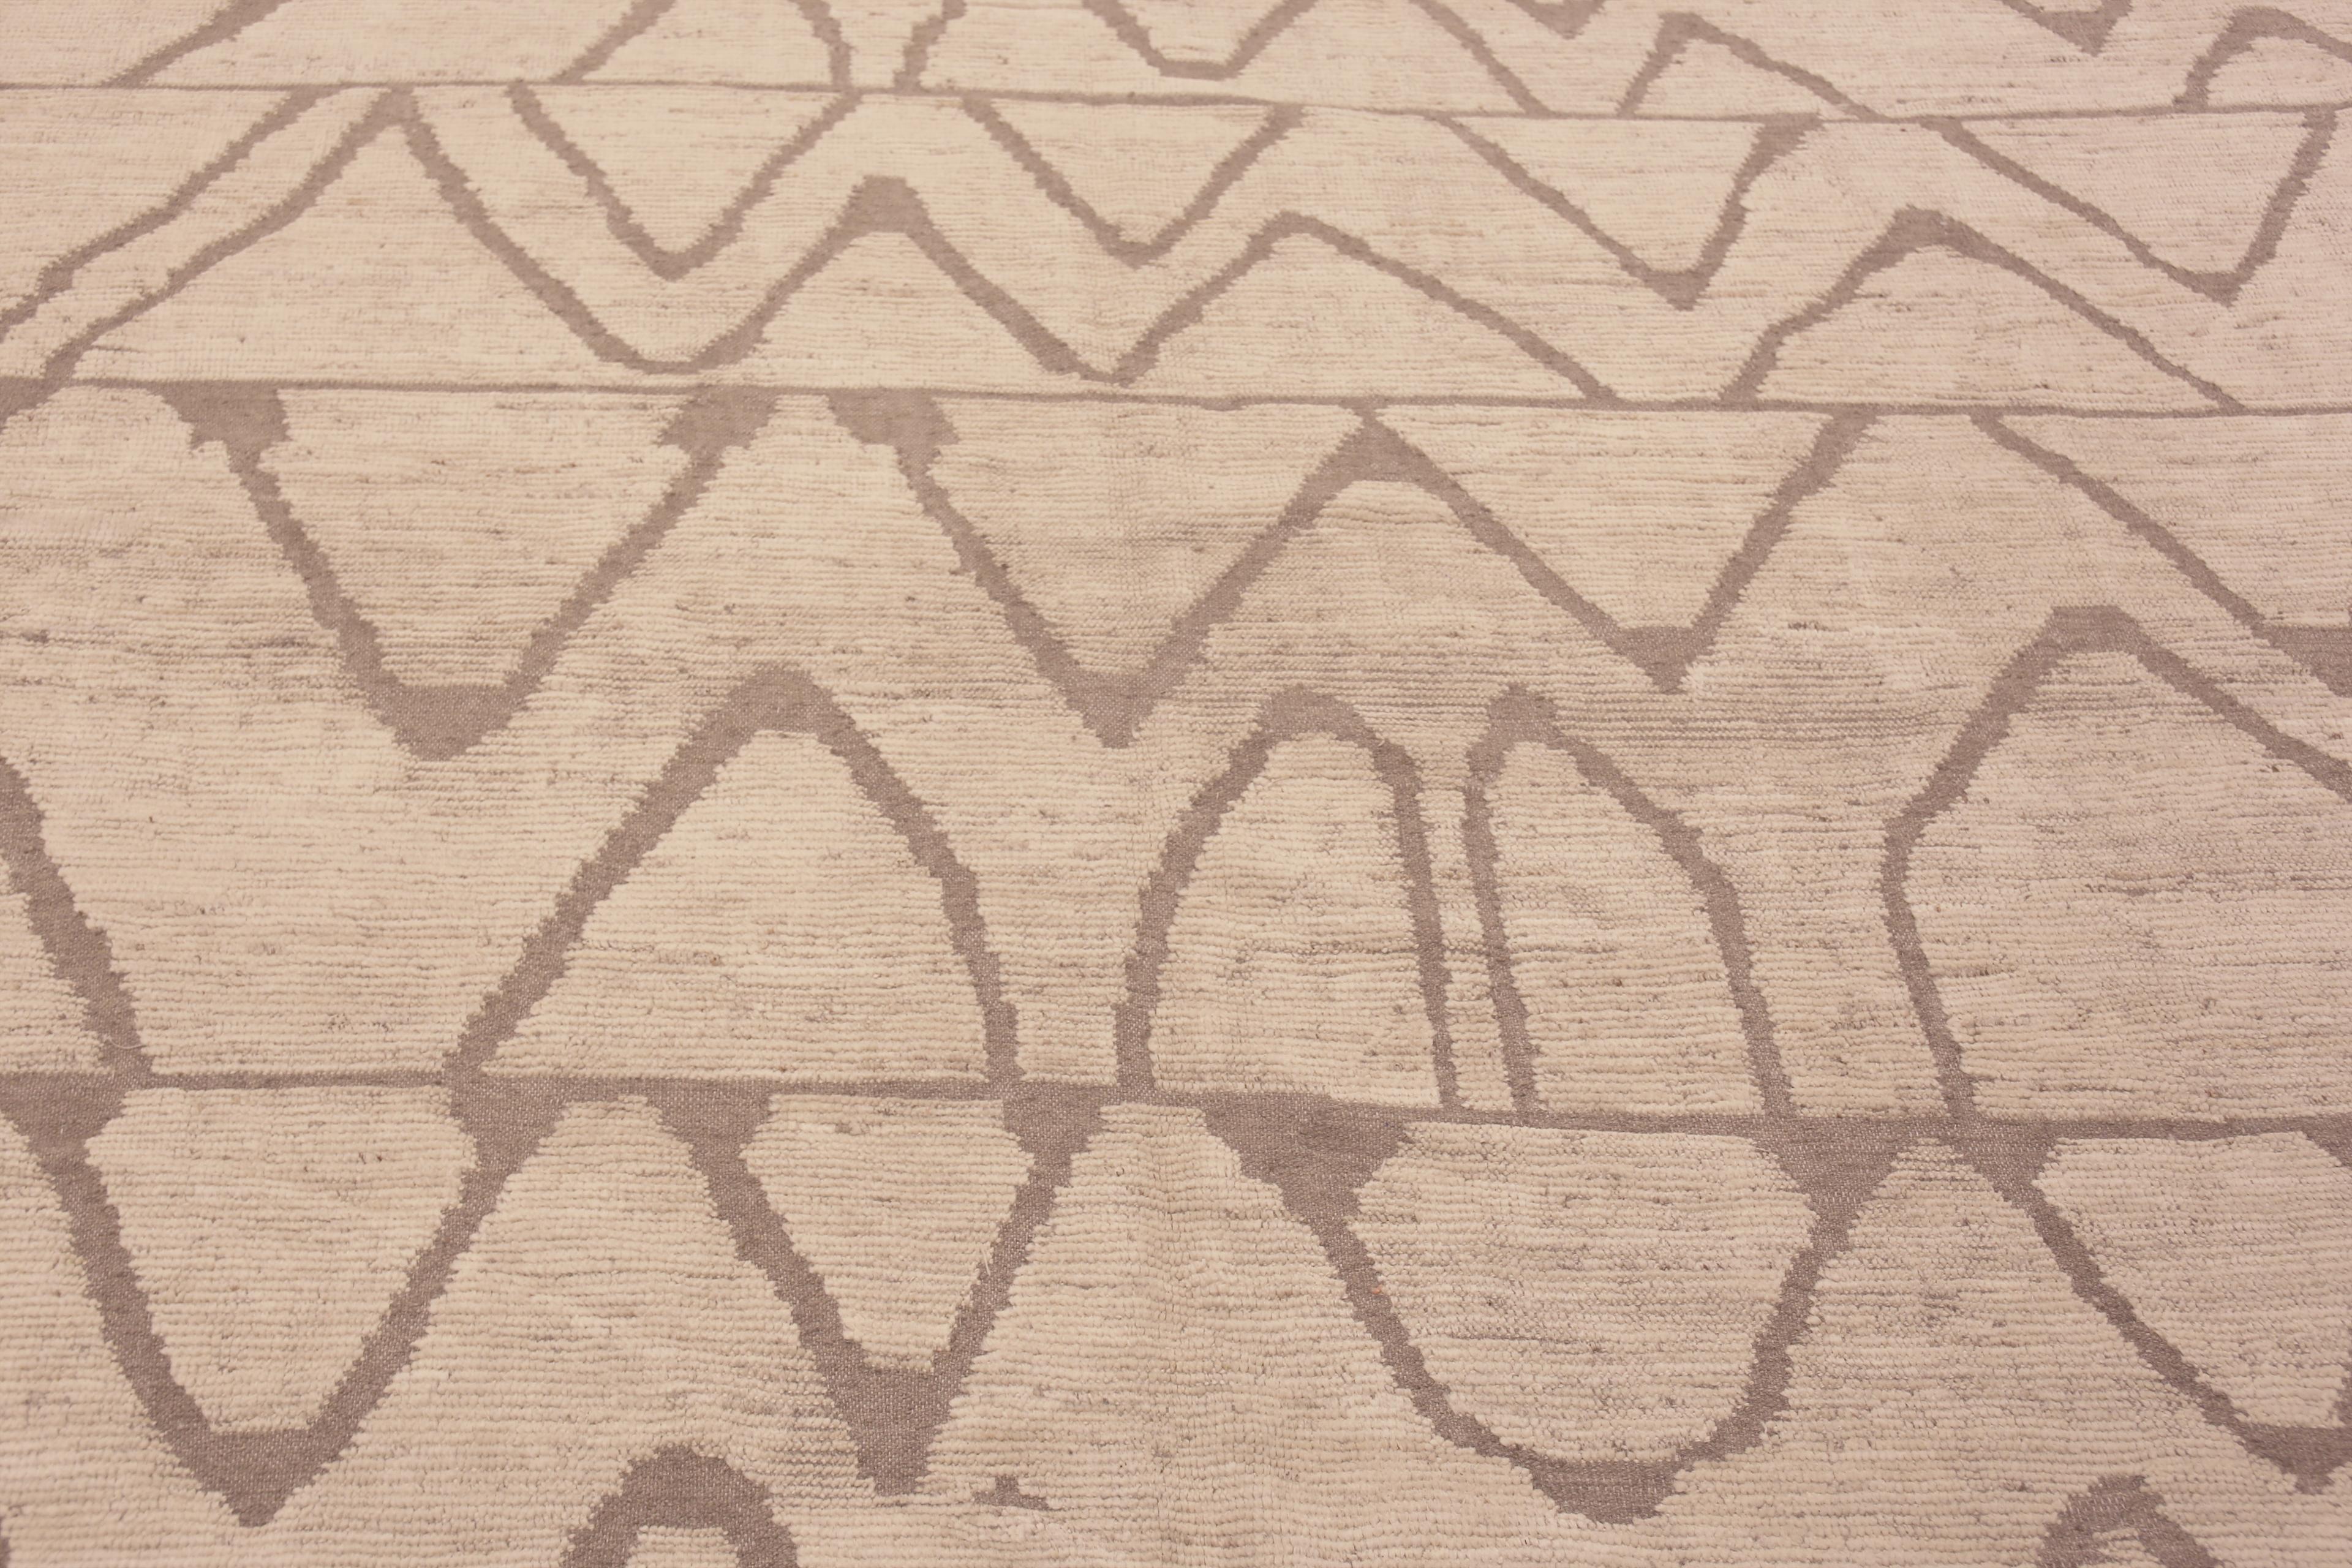 Centrasiatique Collection Nazmiyal - Design tribal clair - Tapis moderne de 20' x 24'4